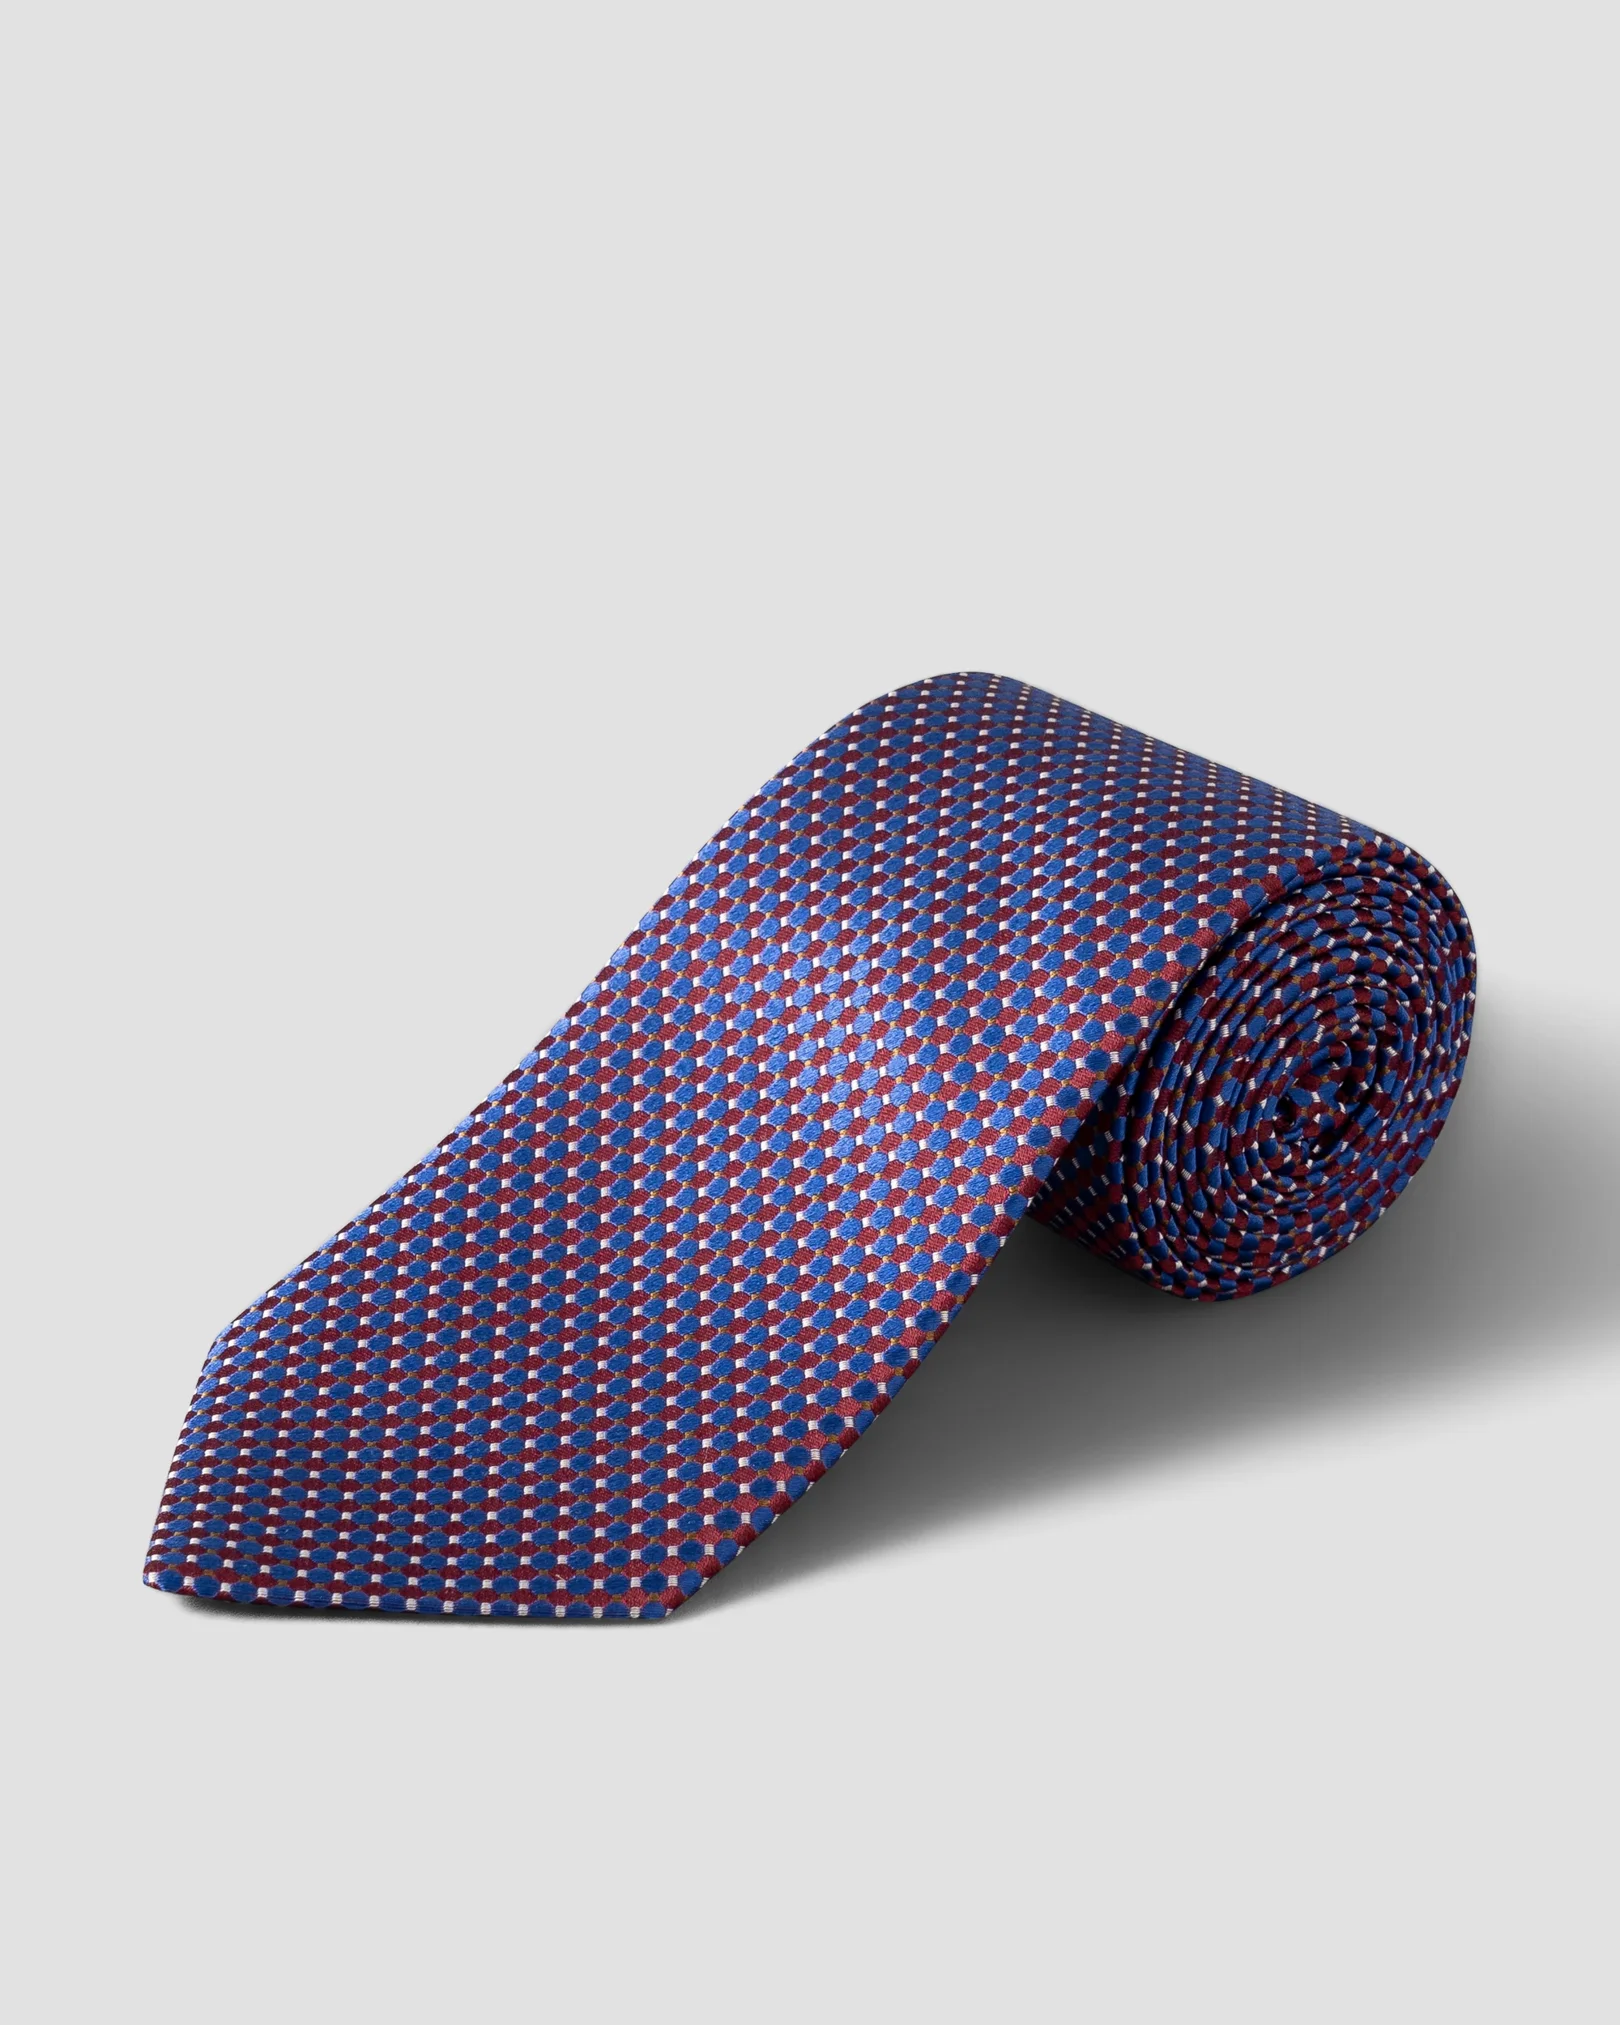 Red Geometric Silk Tie